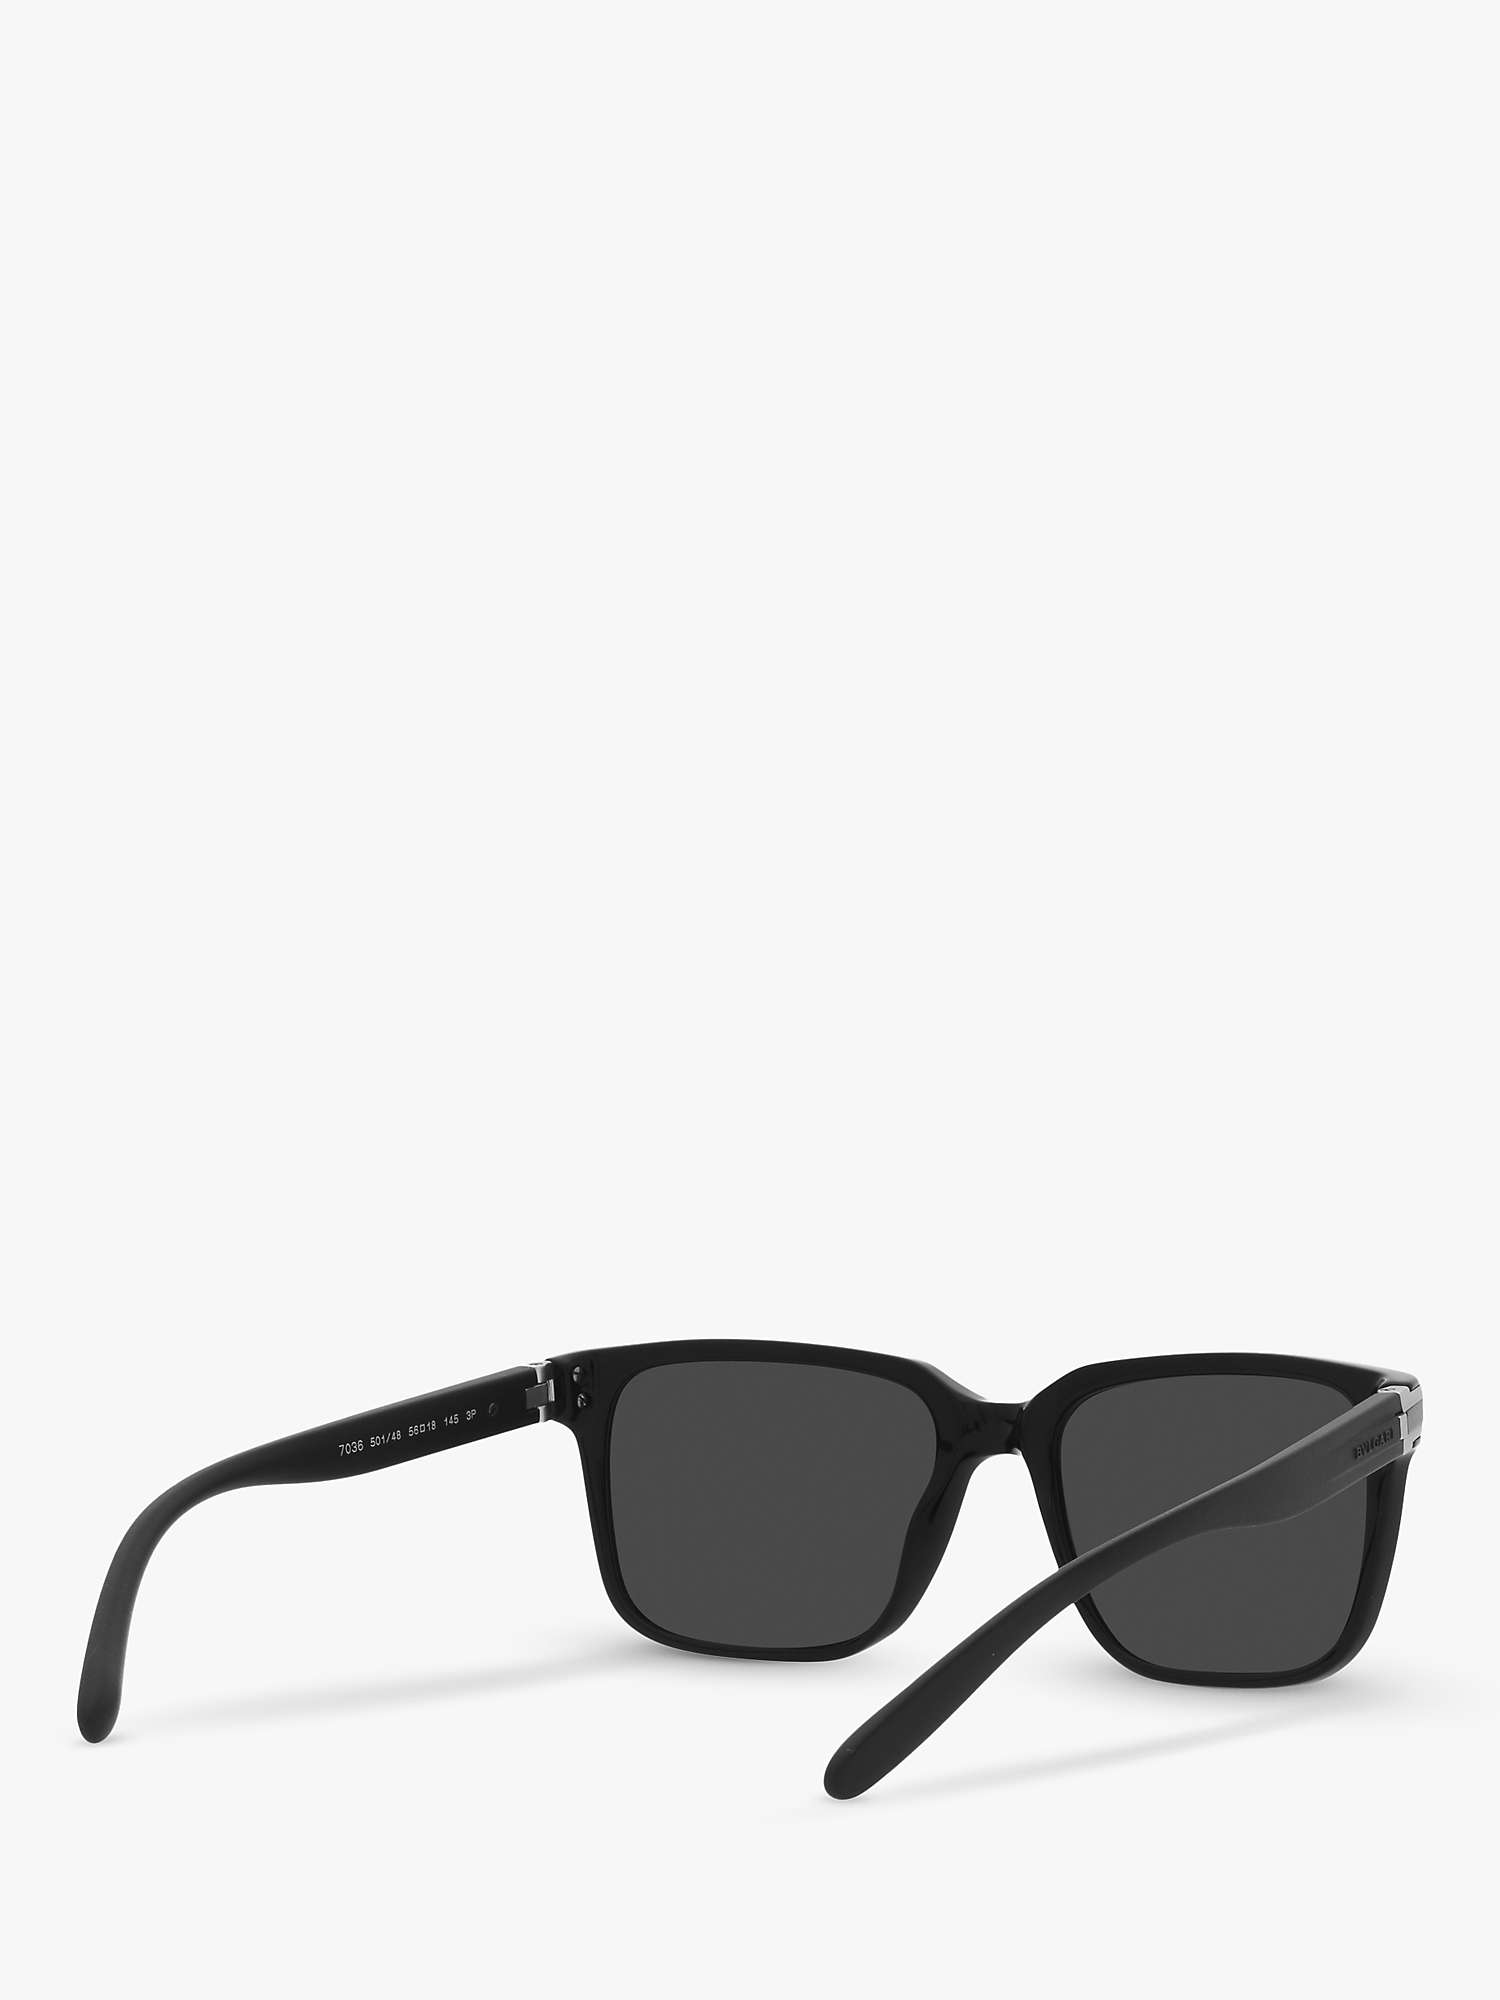 Buy BVLGARI BV7036 Men's Polarised Rectangular Sunglasses, Black/Grey Online at johnlewis.com